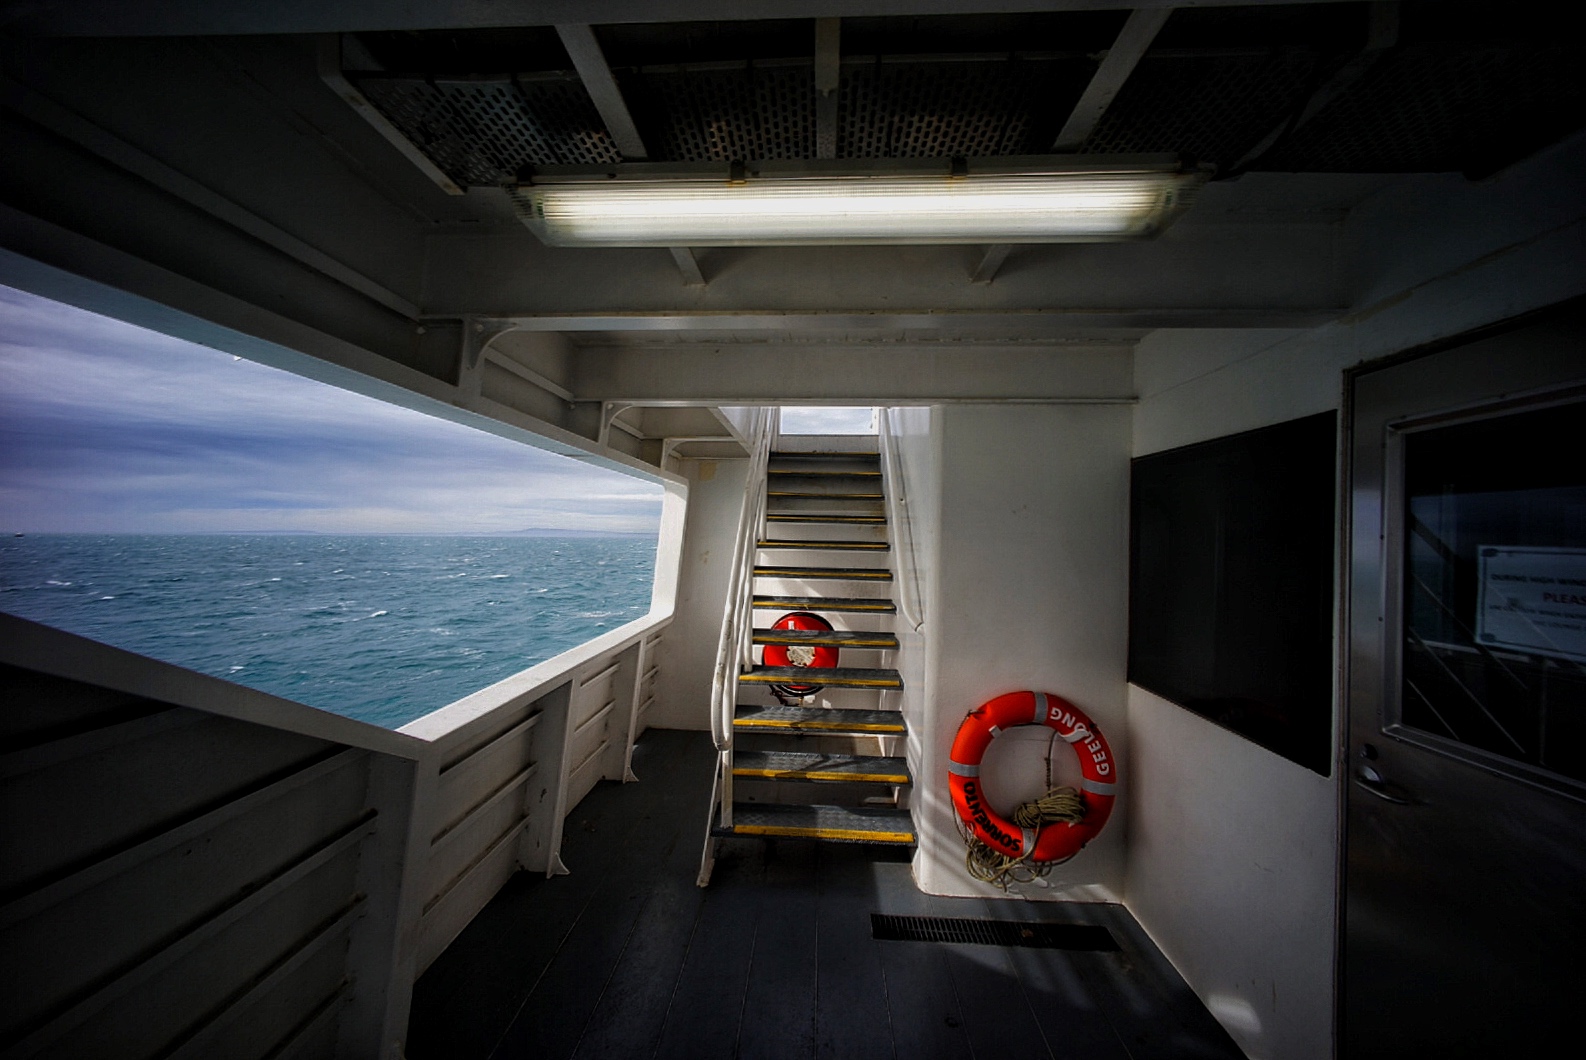 Ferry Exterior 1 #sonya7 #voigtlander12mm #ultrawideheliar #ultrawideangle #sorrento #queenscliff #ferry